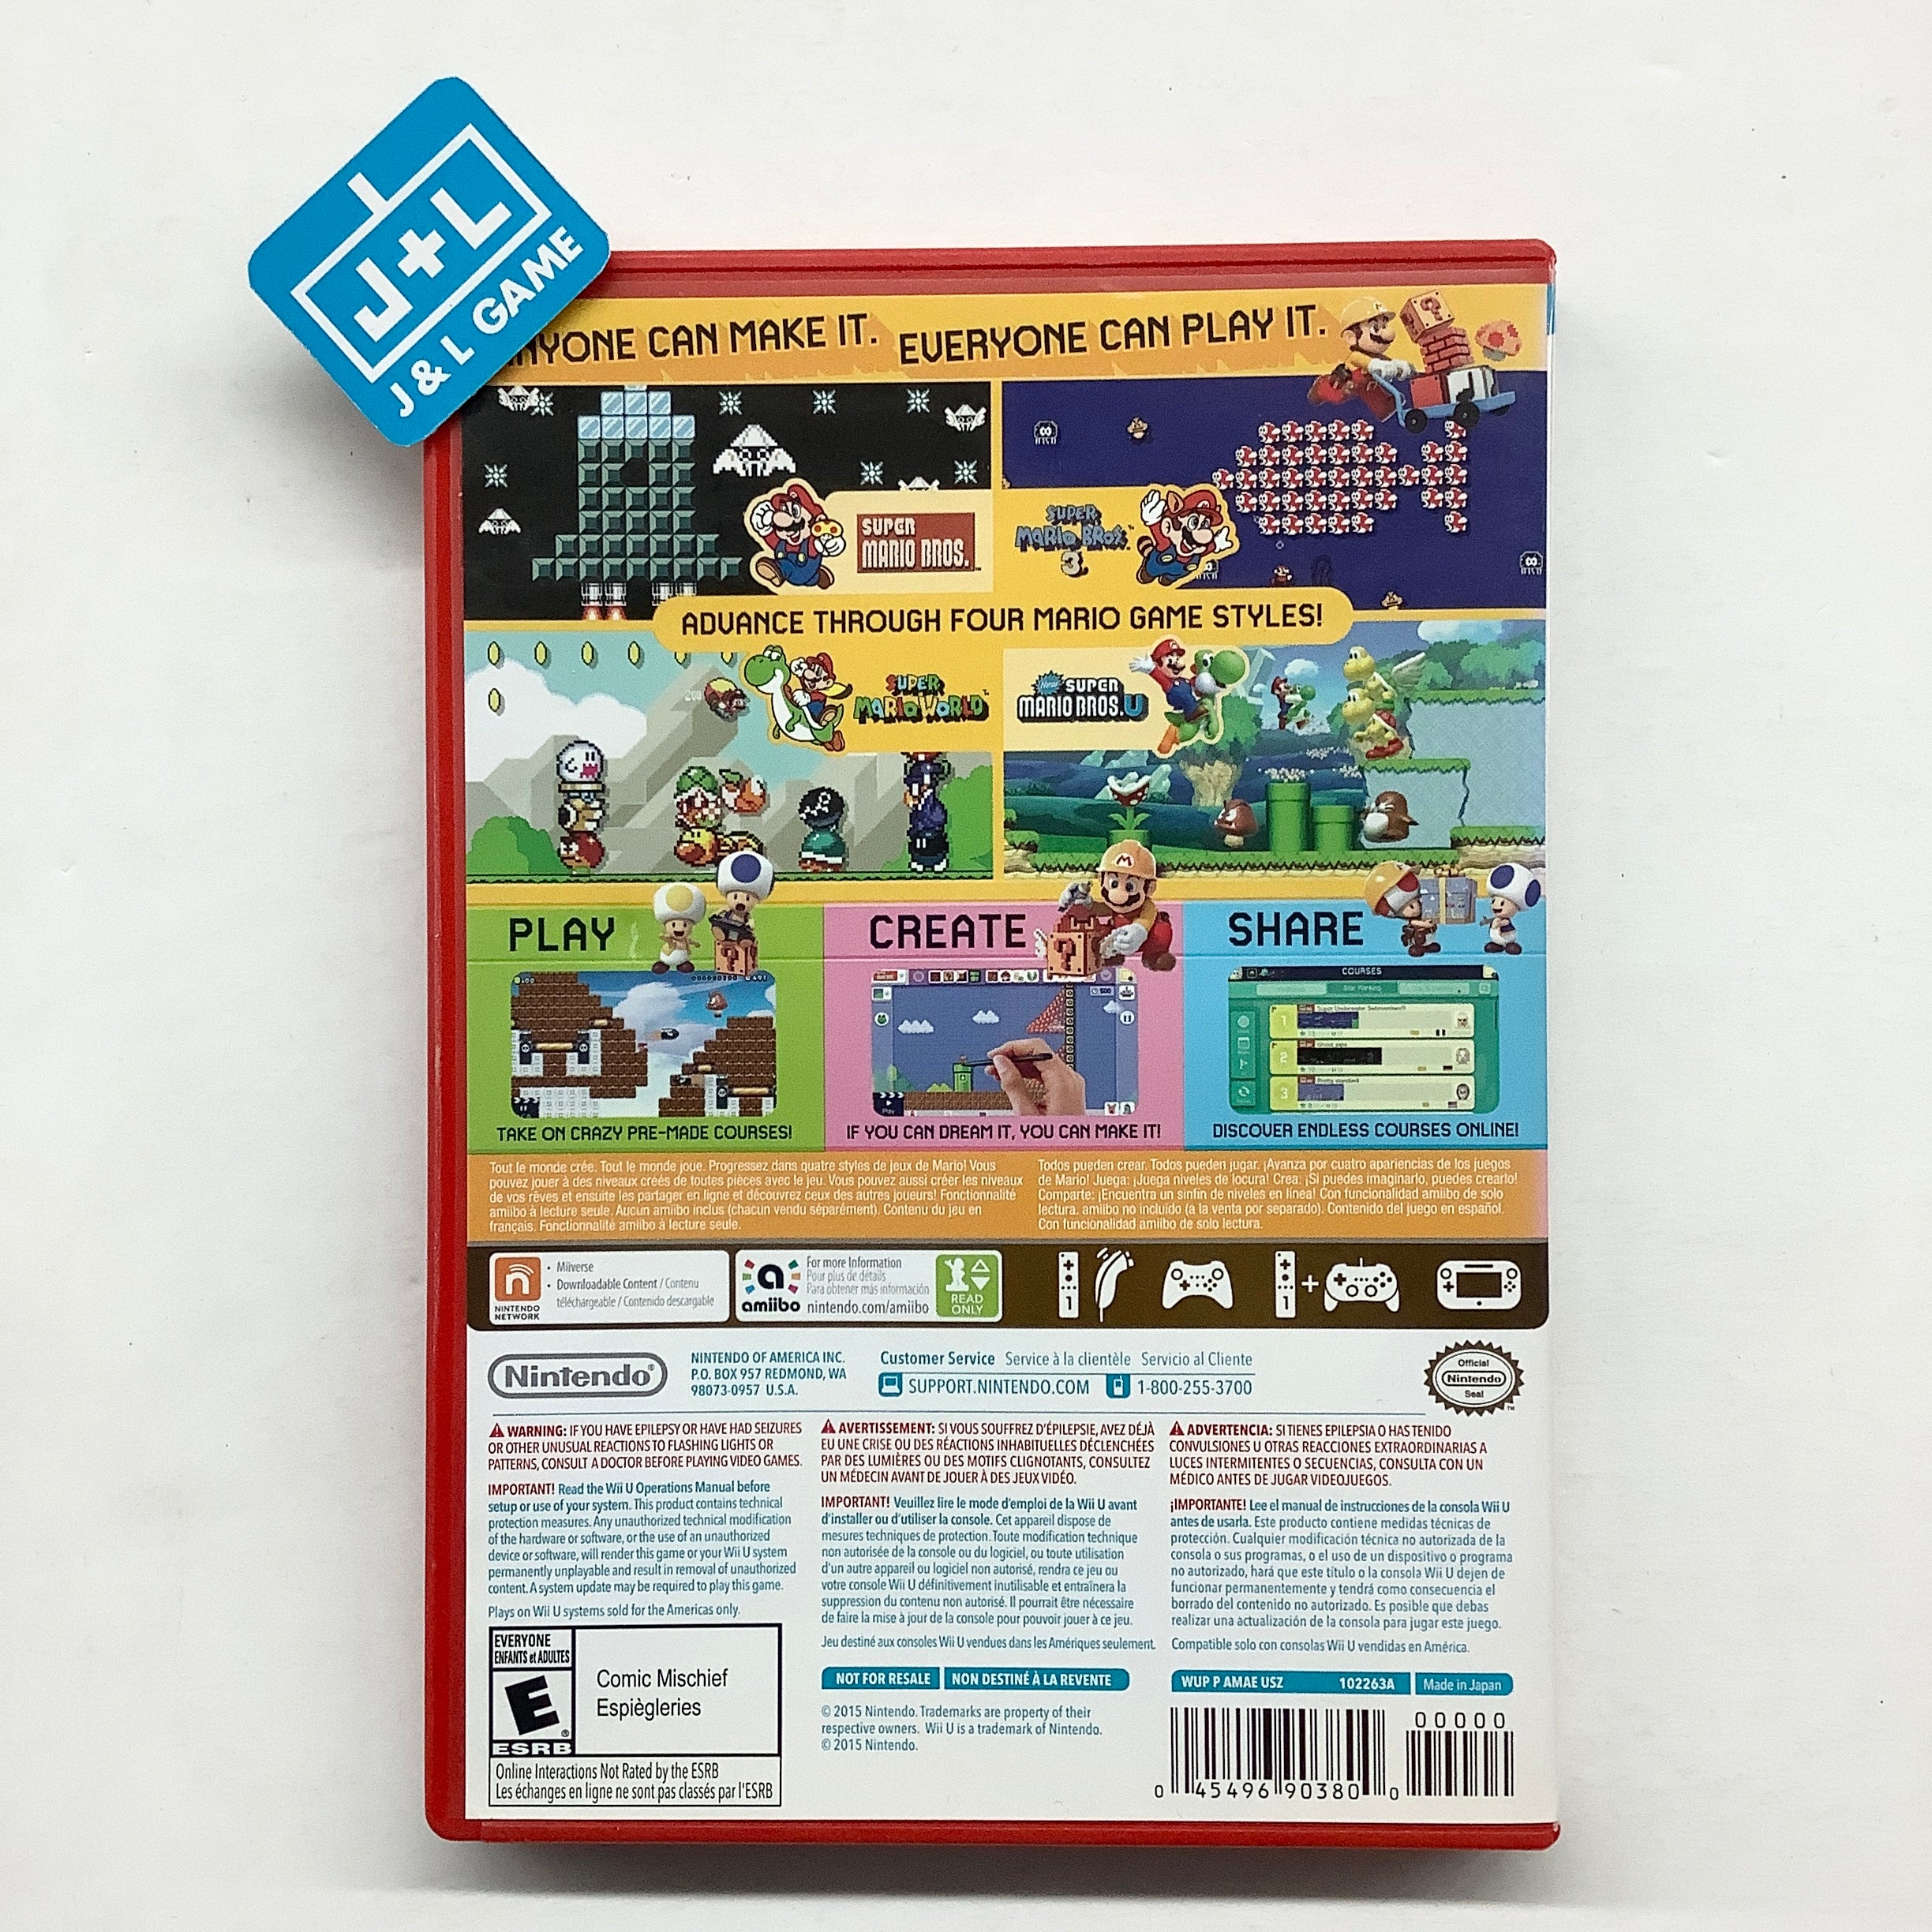 Super Mario Maker - Nintendo Wii U [Pre-Owned] Video Games Nintendo   